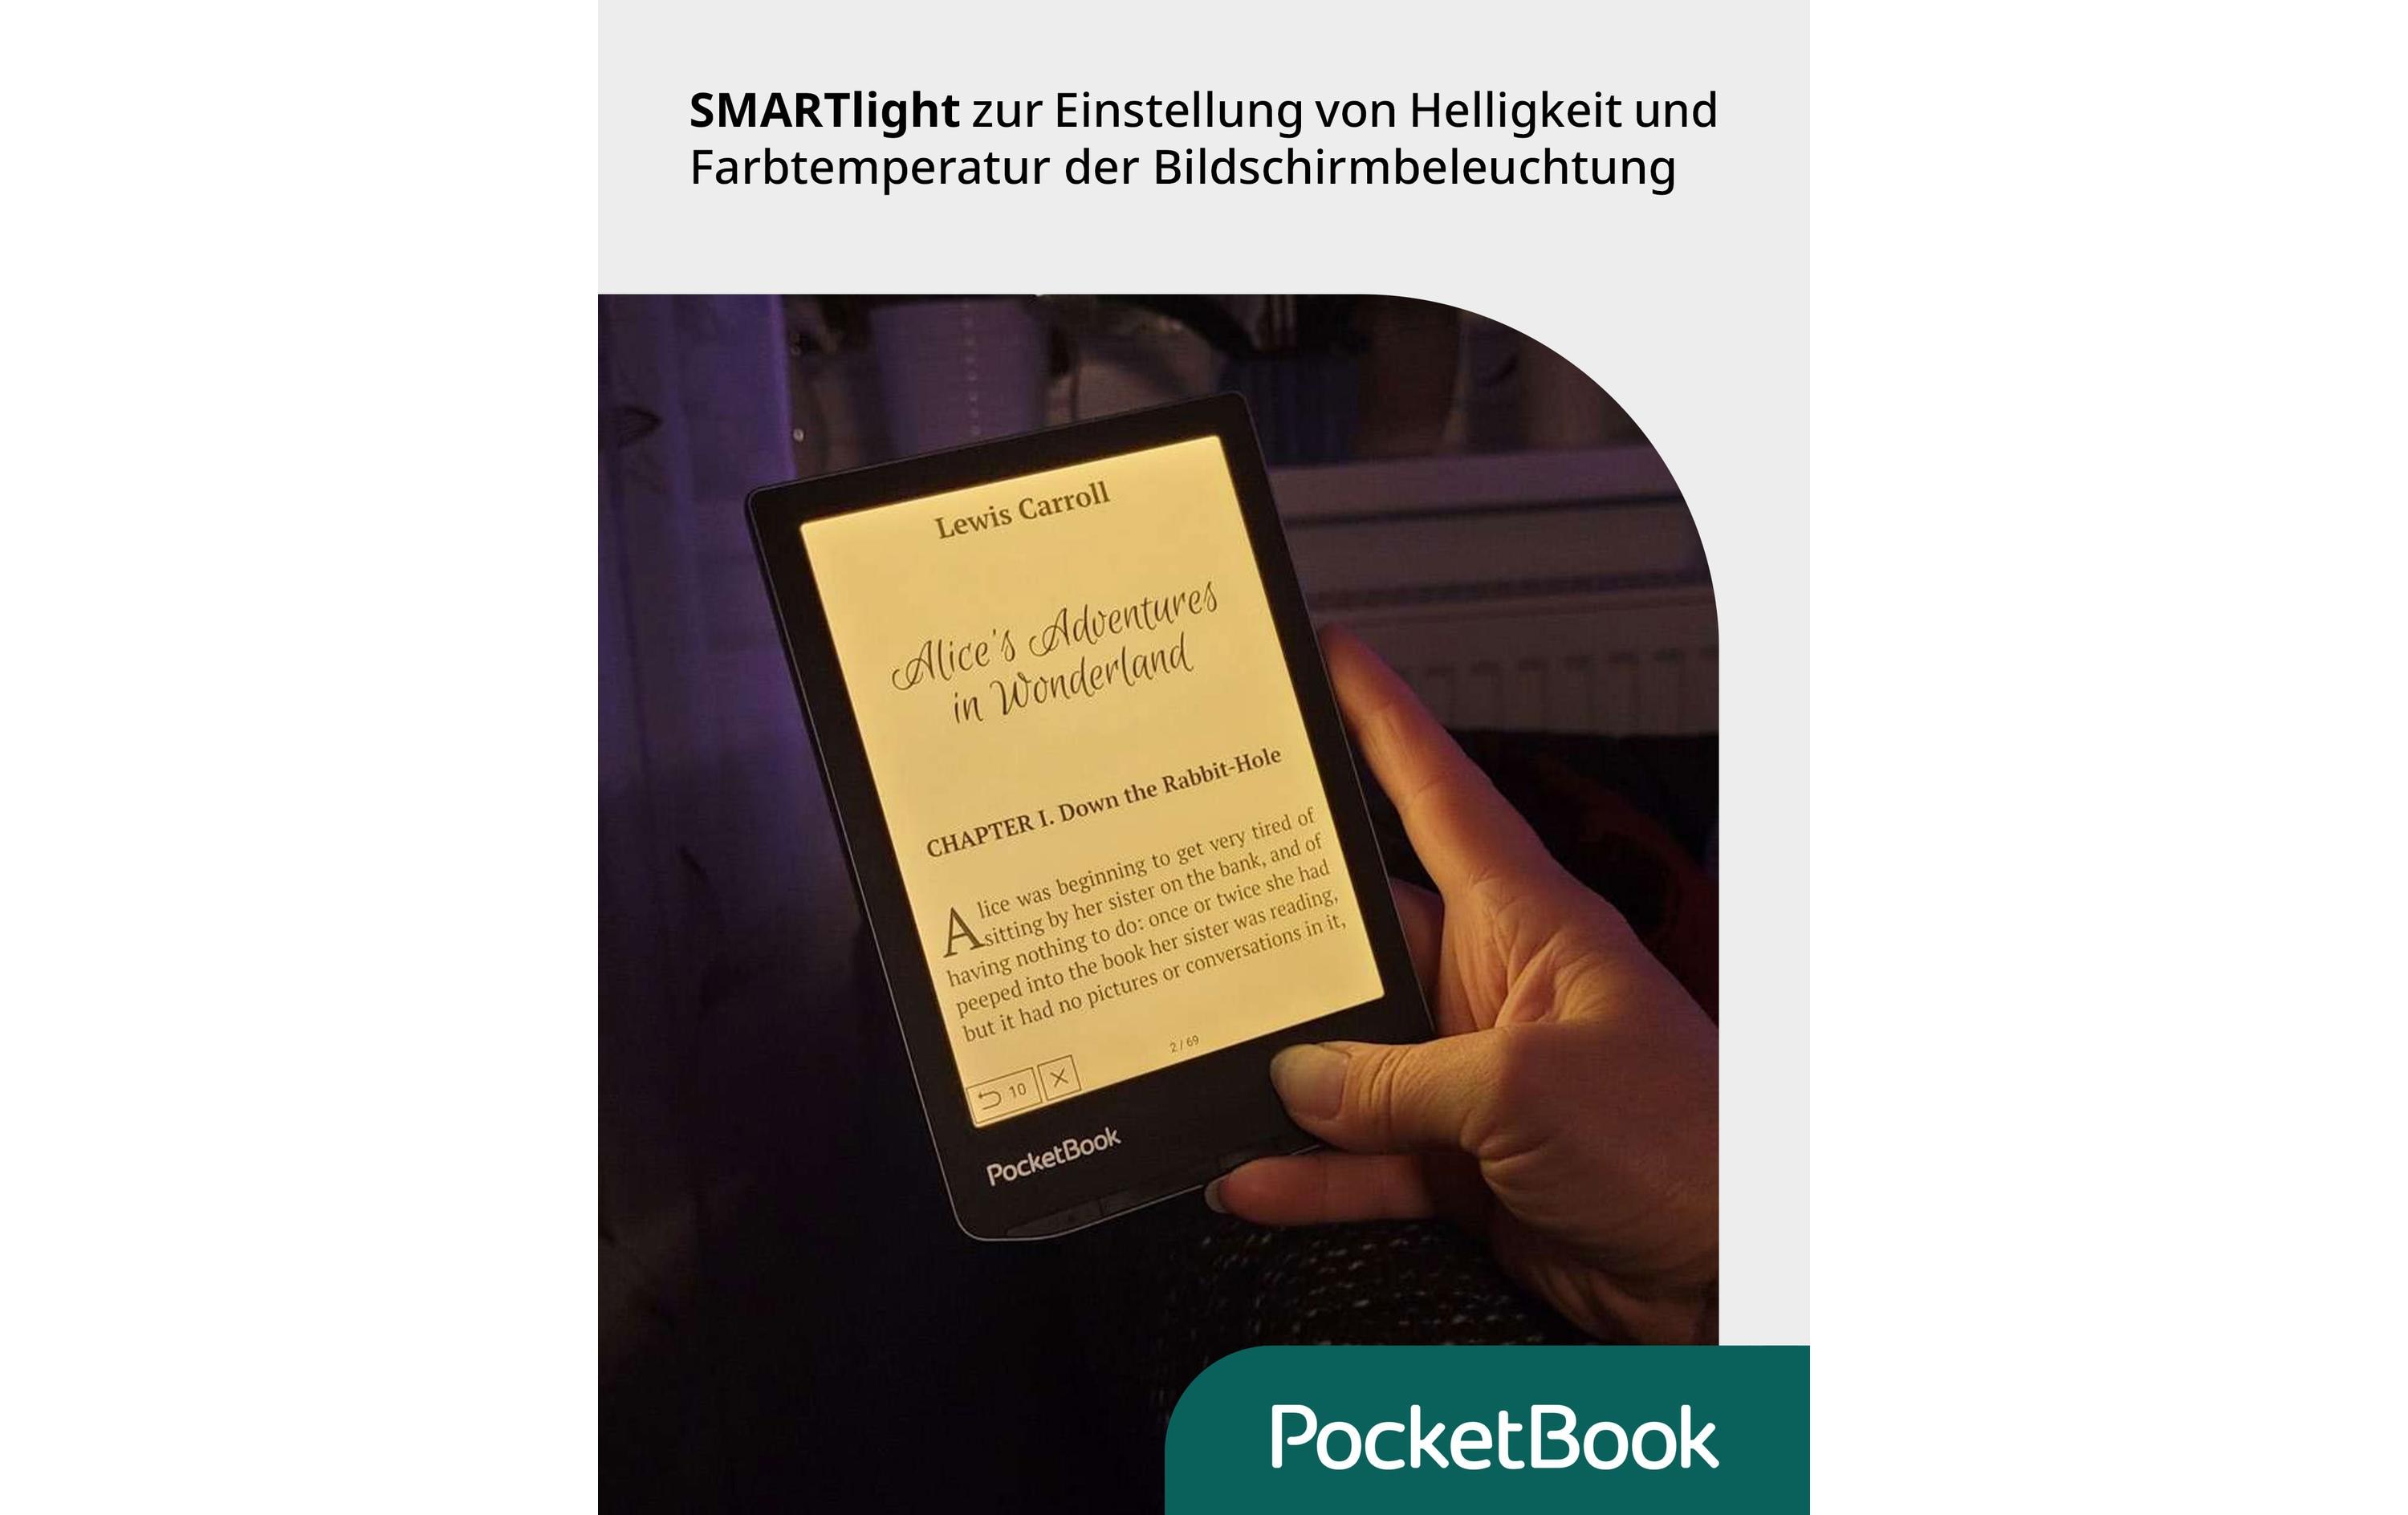 PocketBook E-Book Reader Verse Bright blue